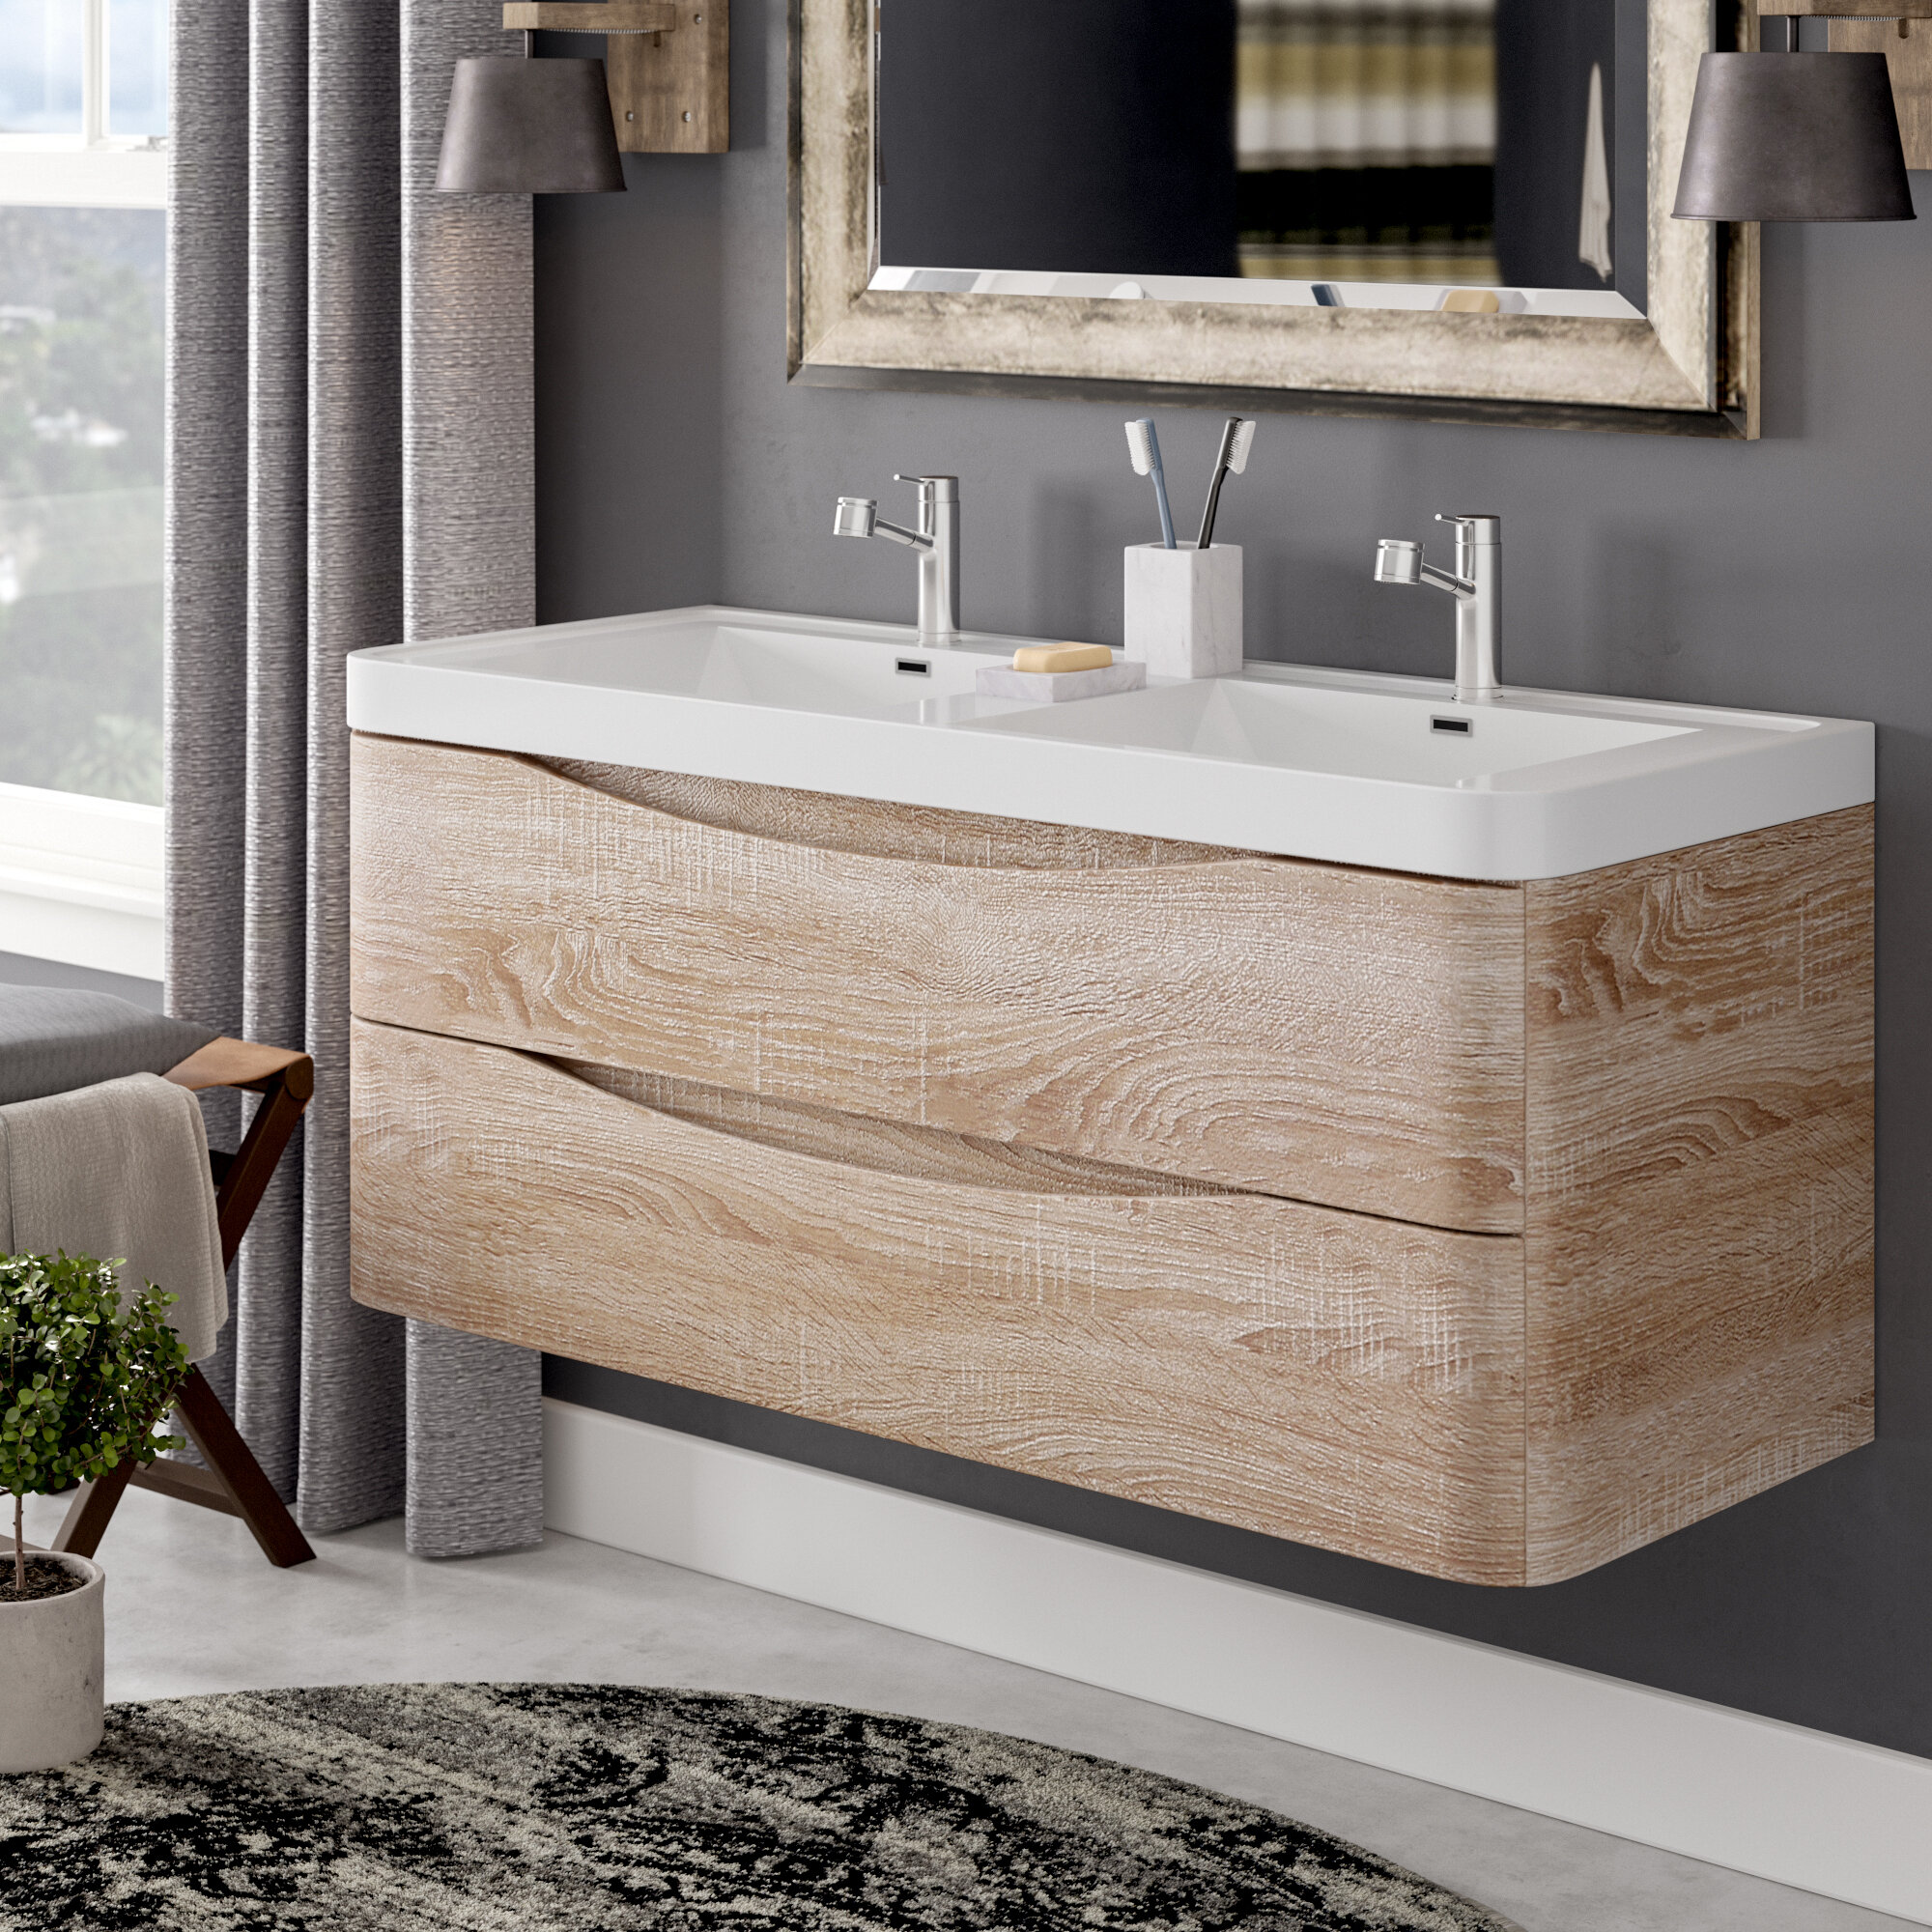 Union Rustic Corso Modern 48 Double Bathroom Vanity Set Reviews Wayfair